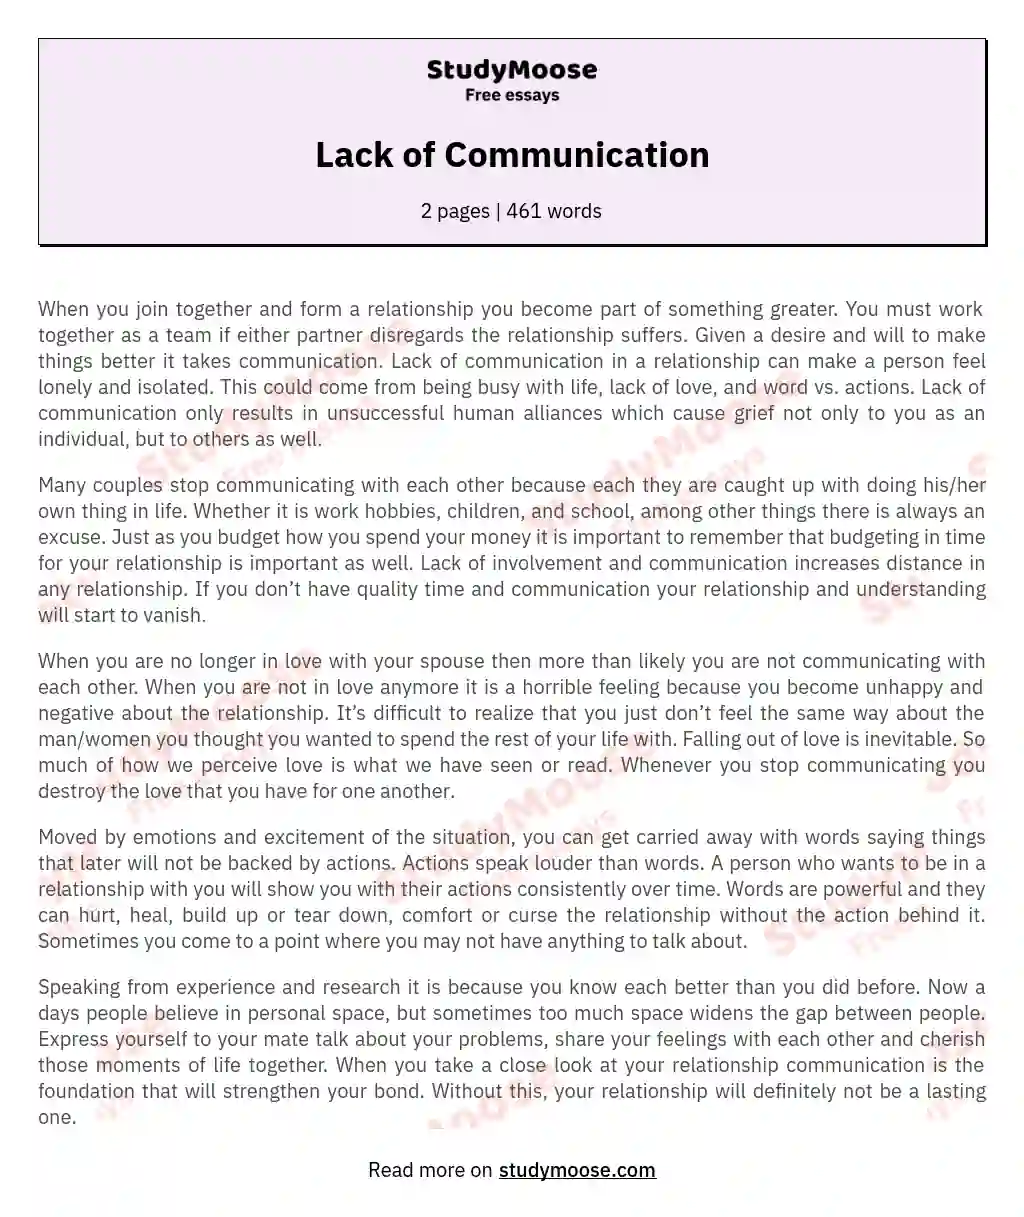 Lack of Communication essay